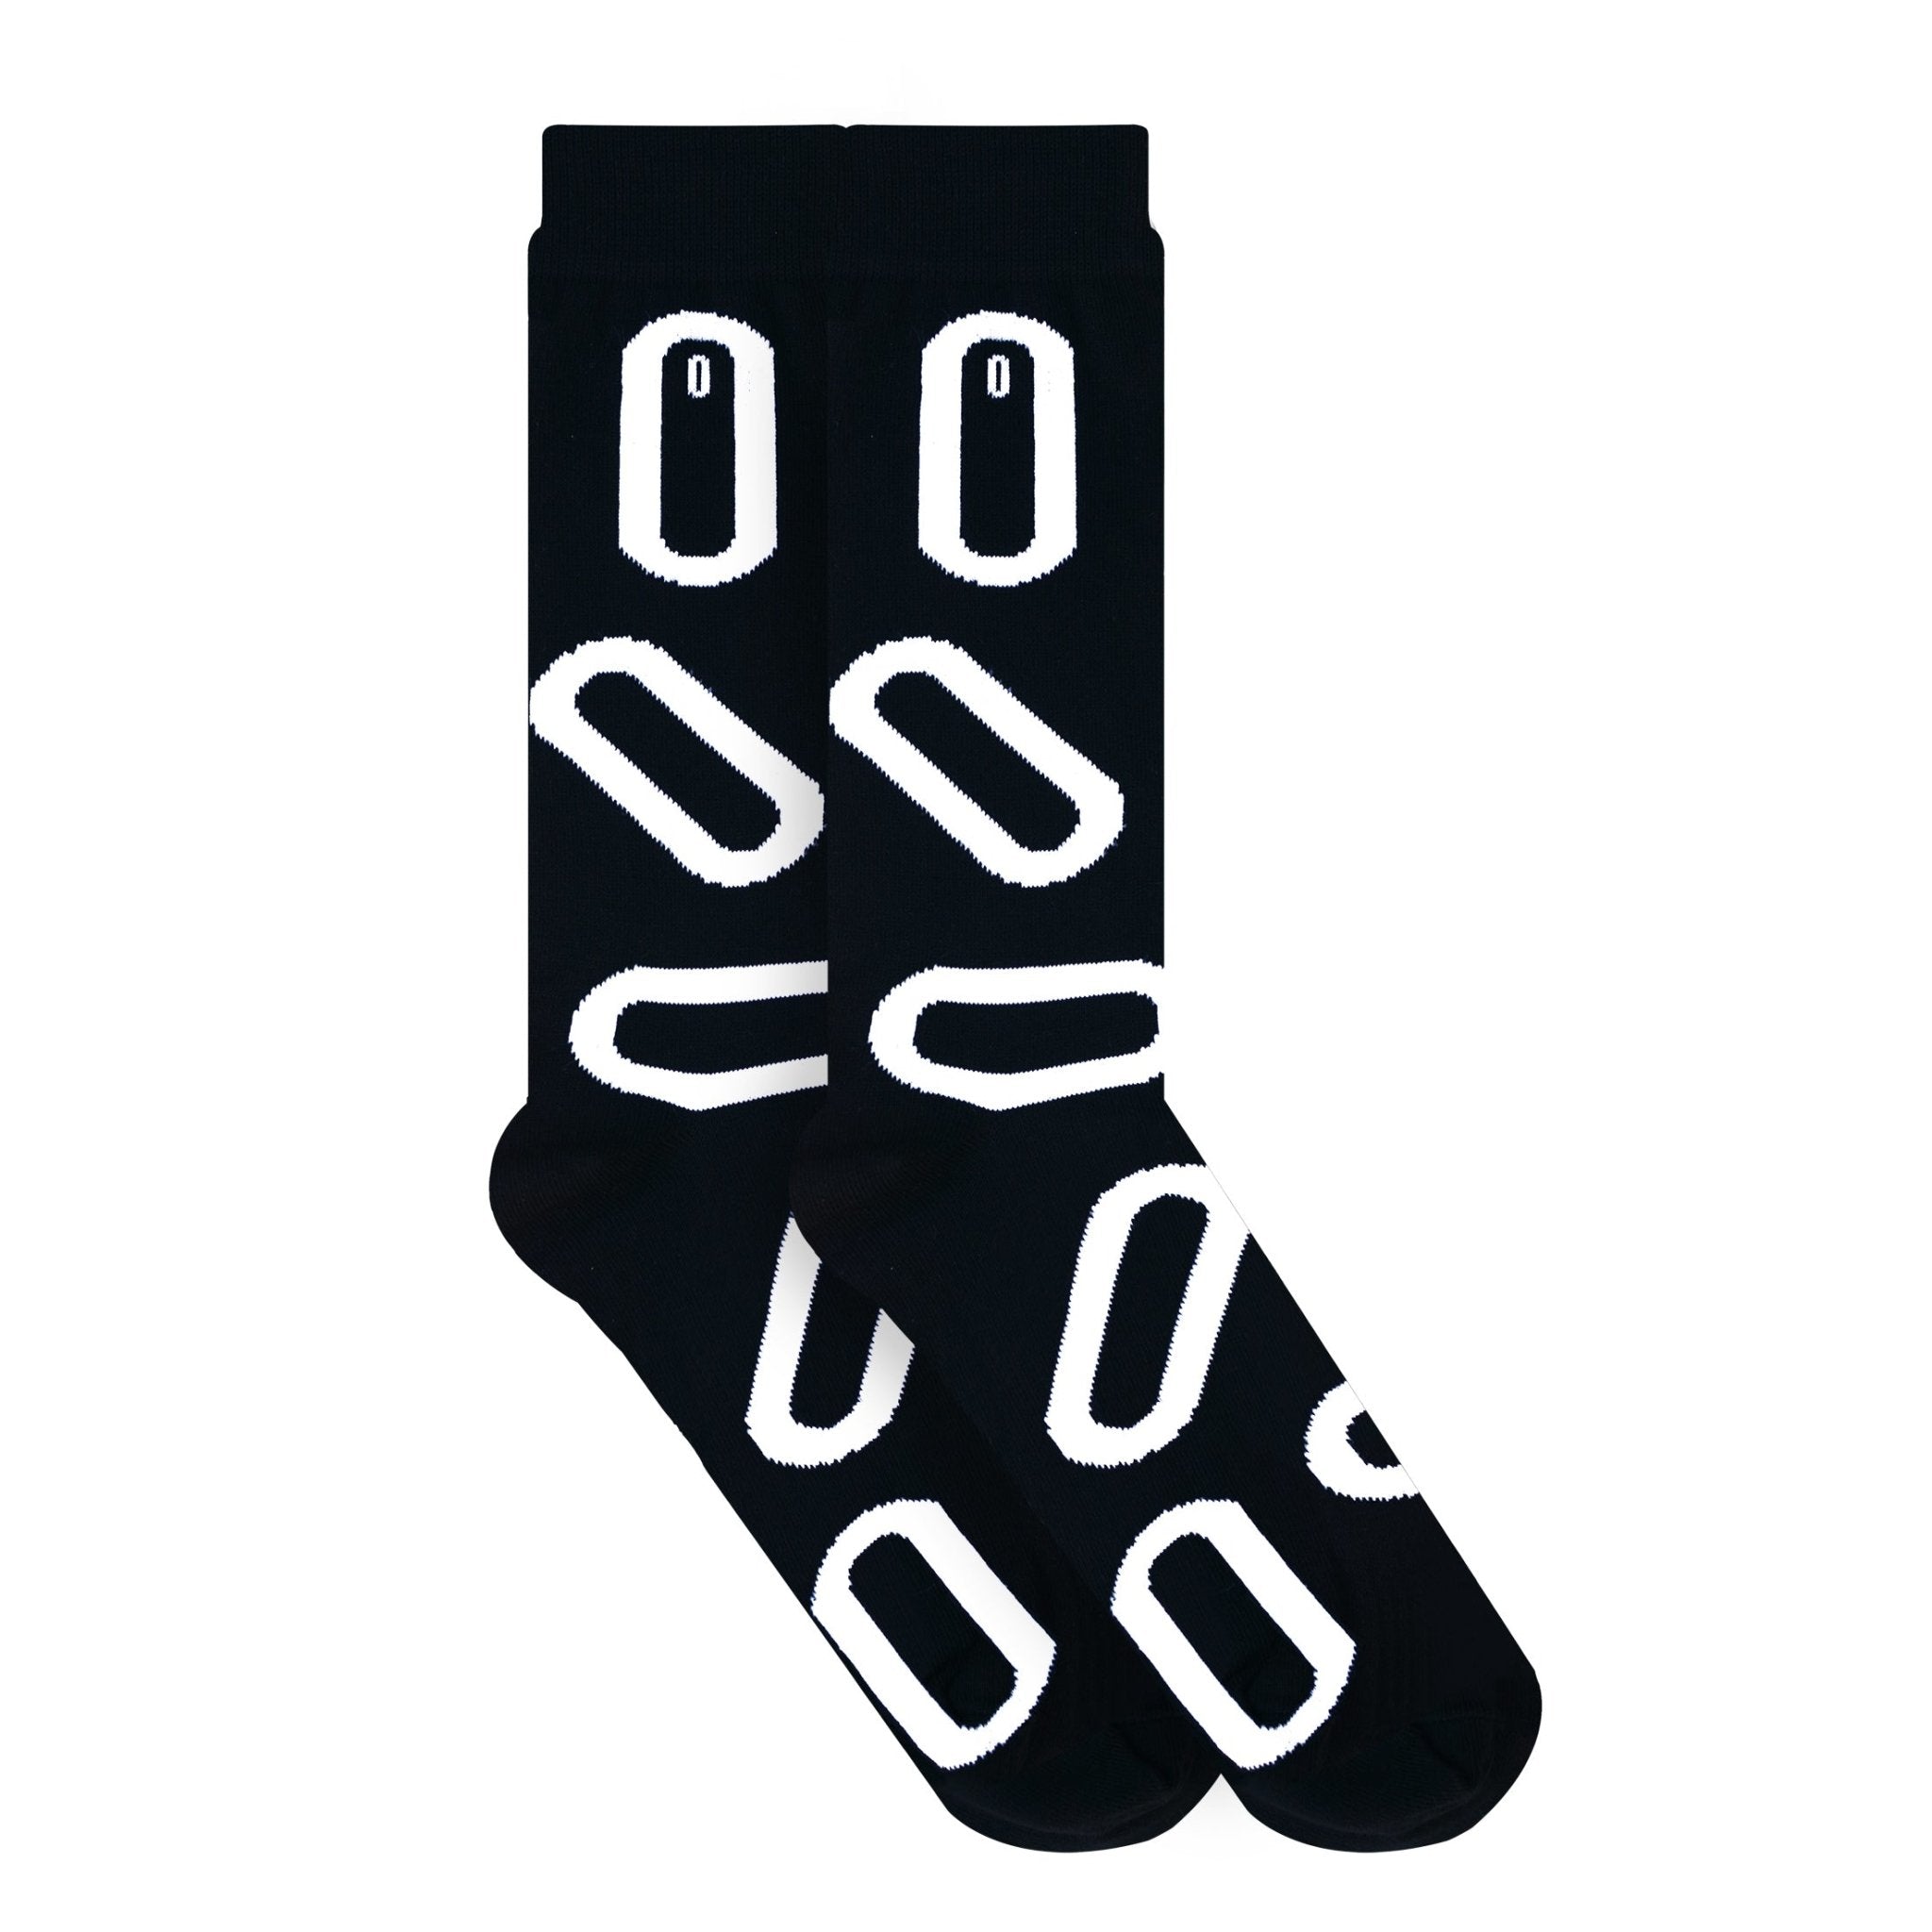 calcetin-negro-figuras-blancasms011accesoriosskunk-socks-983074.jpg